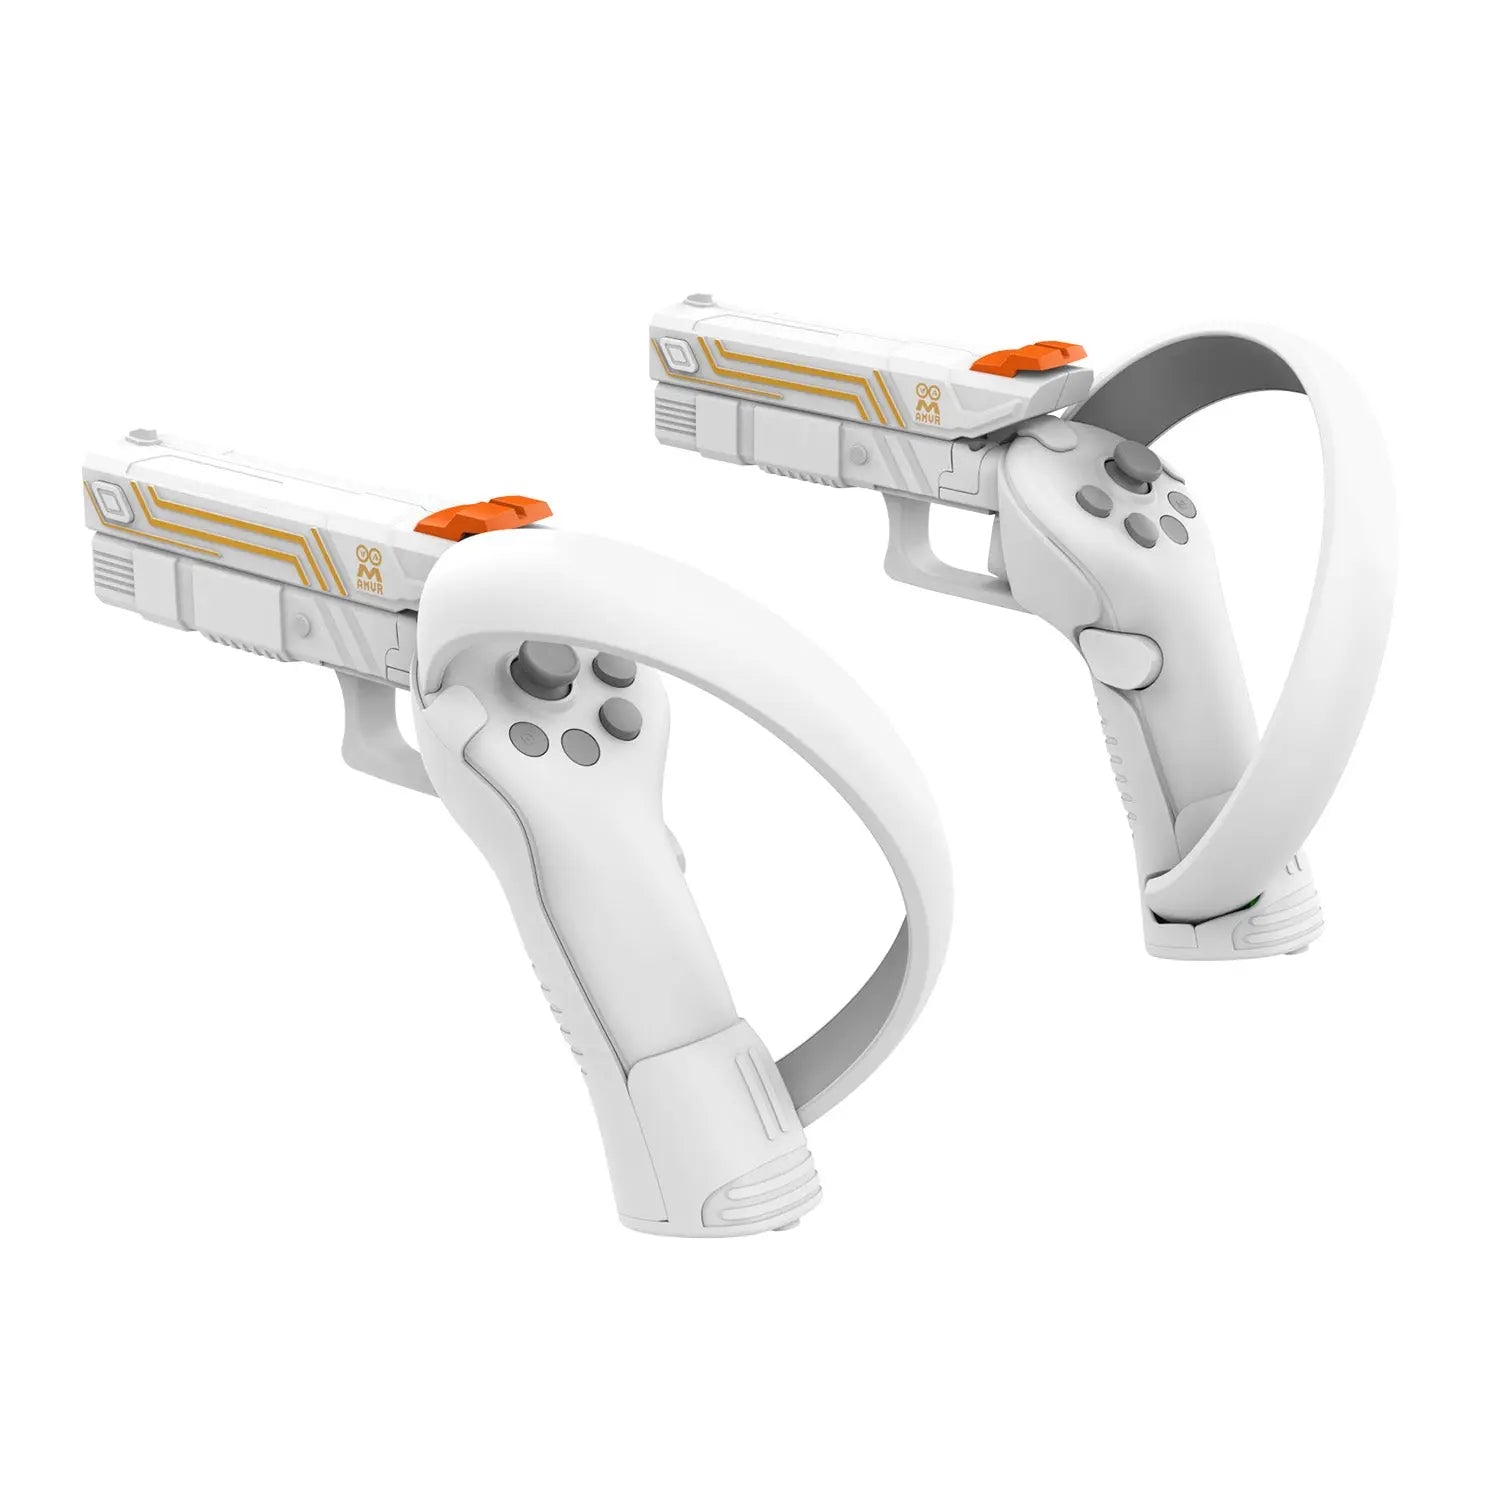 VR Pistol Accessory for PICO 4 AMVRSHOP